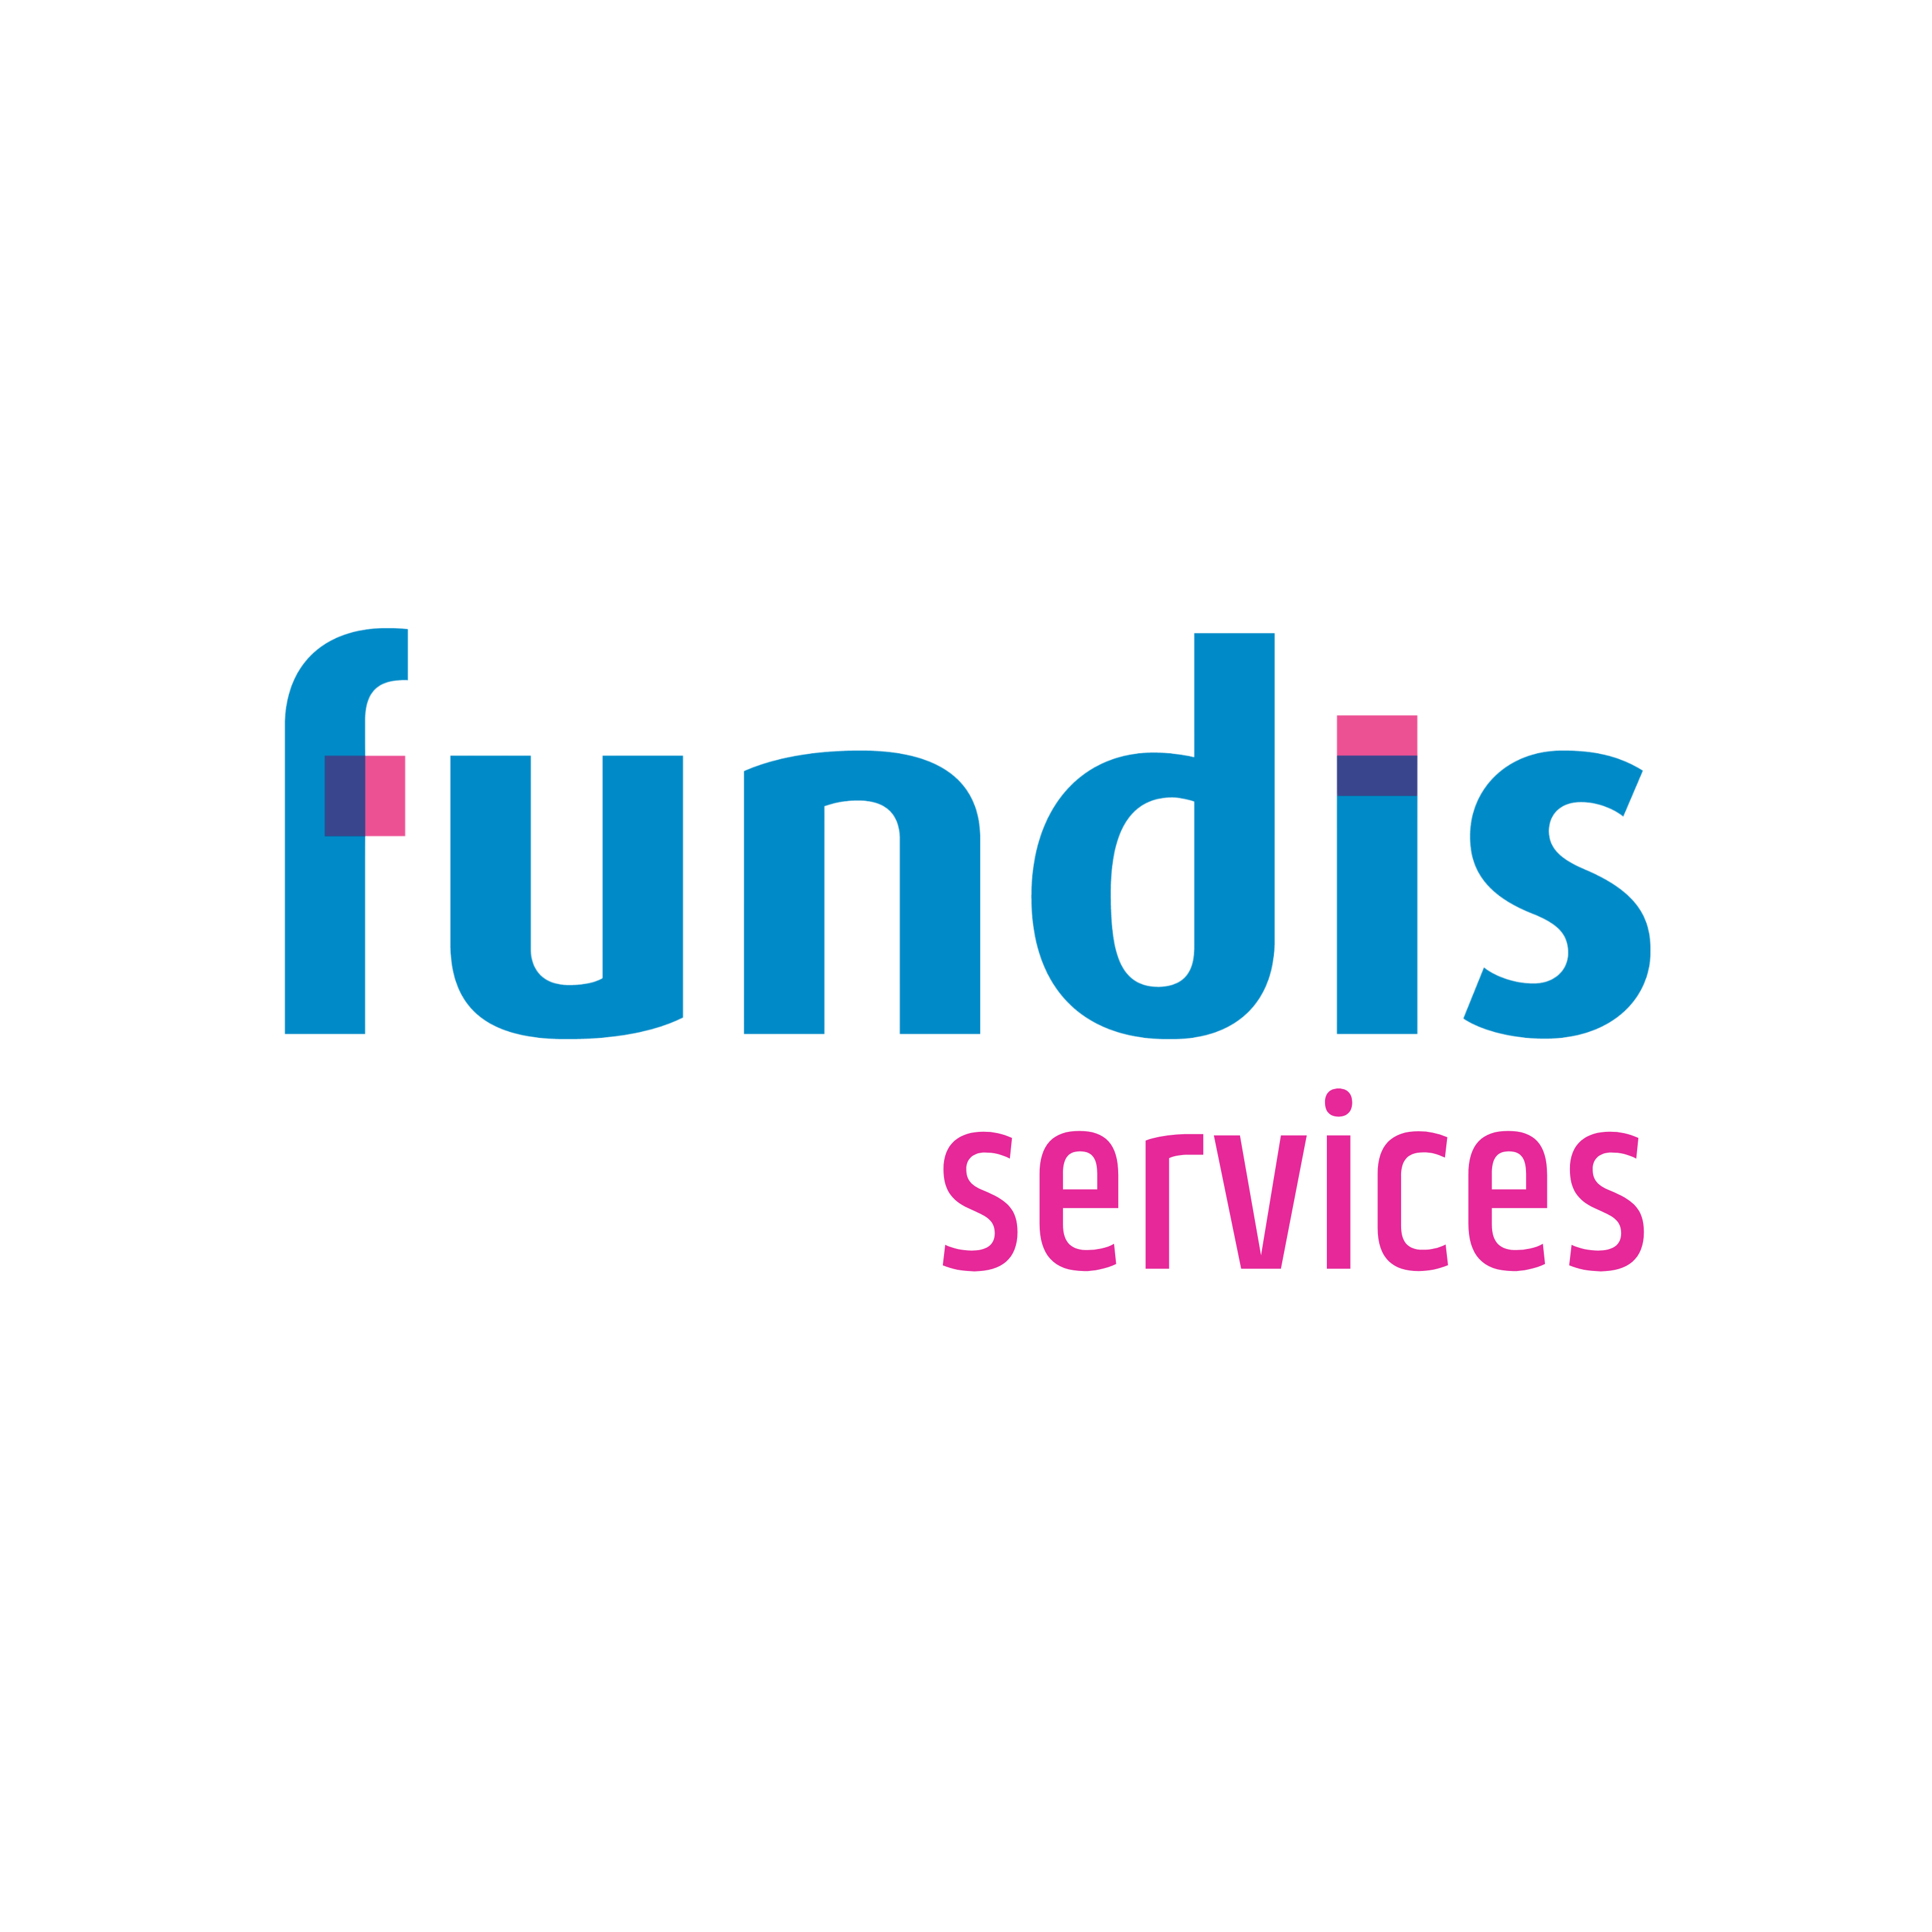 Fundis services logo